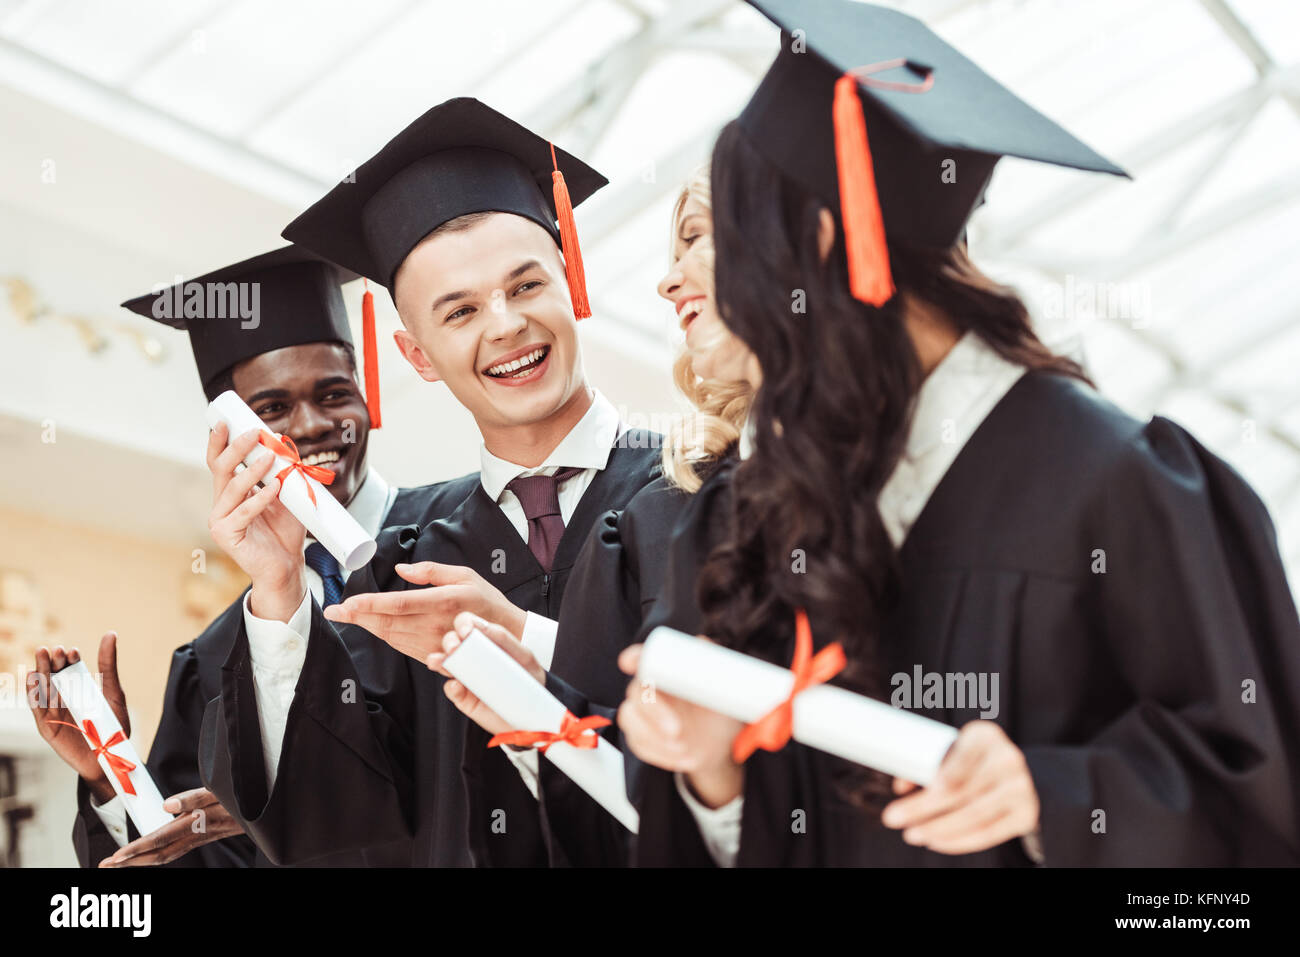 multiethnic students with diplomas Stock Photo